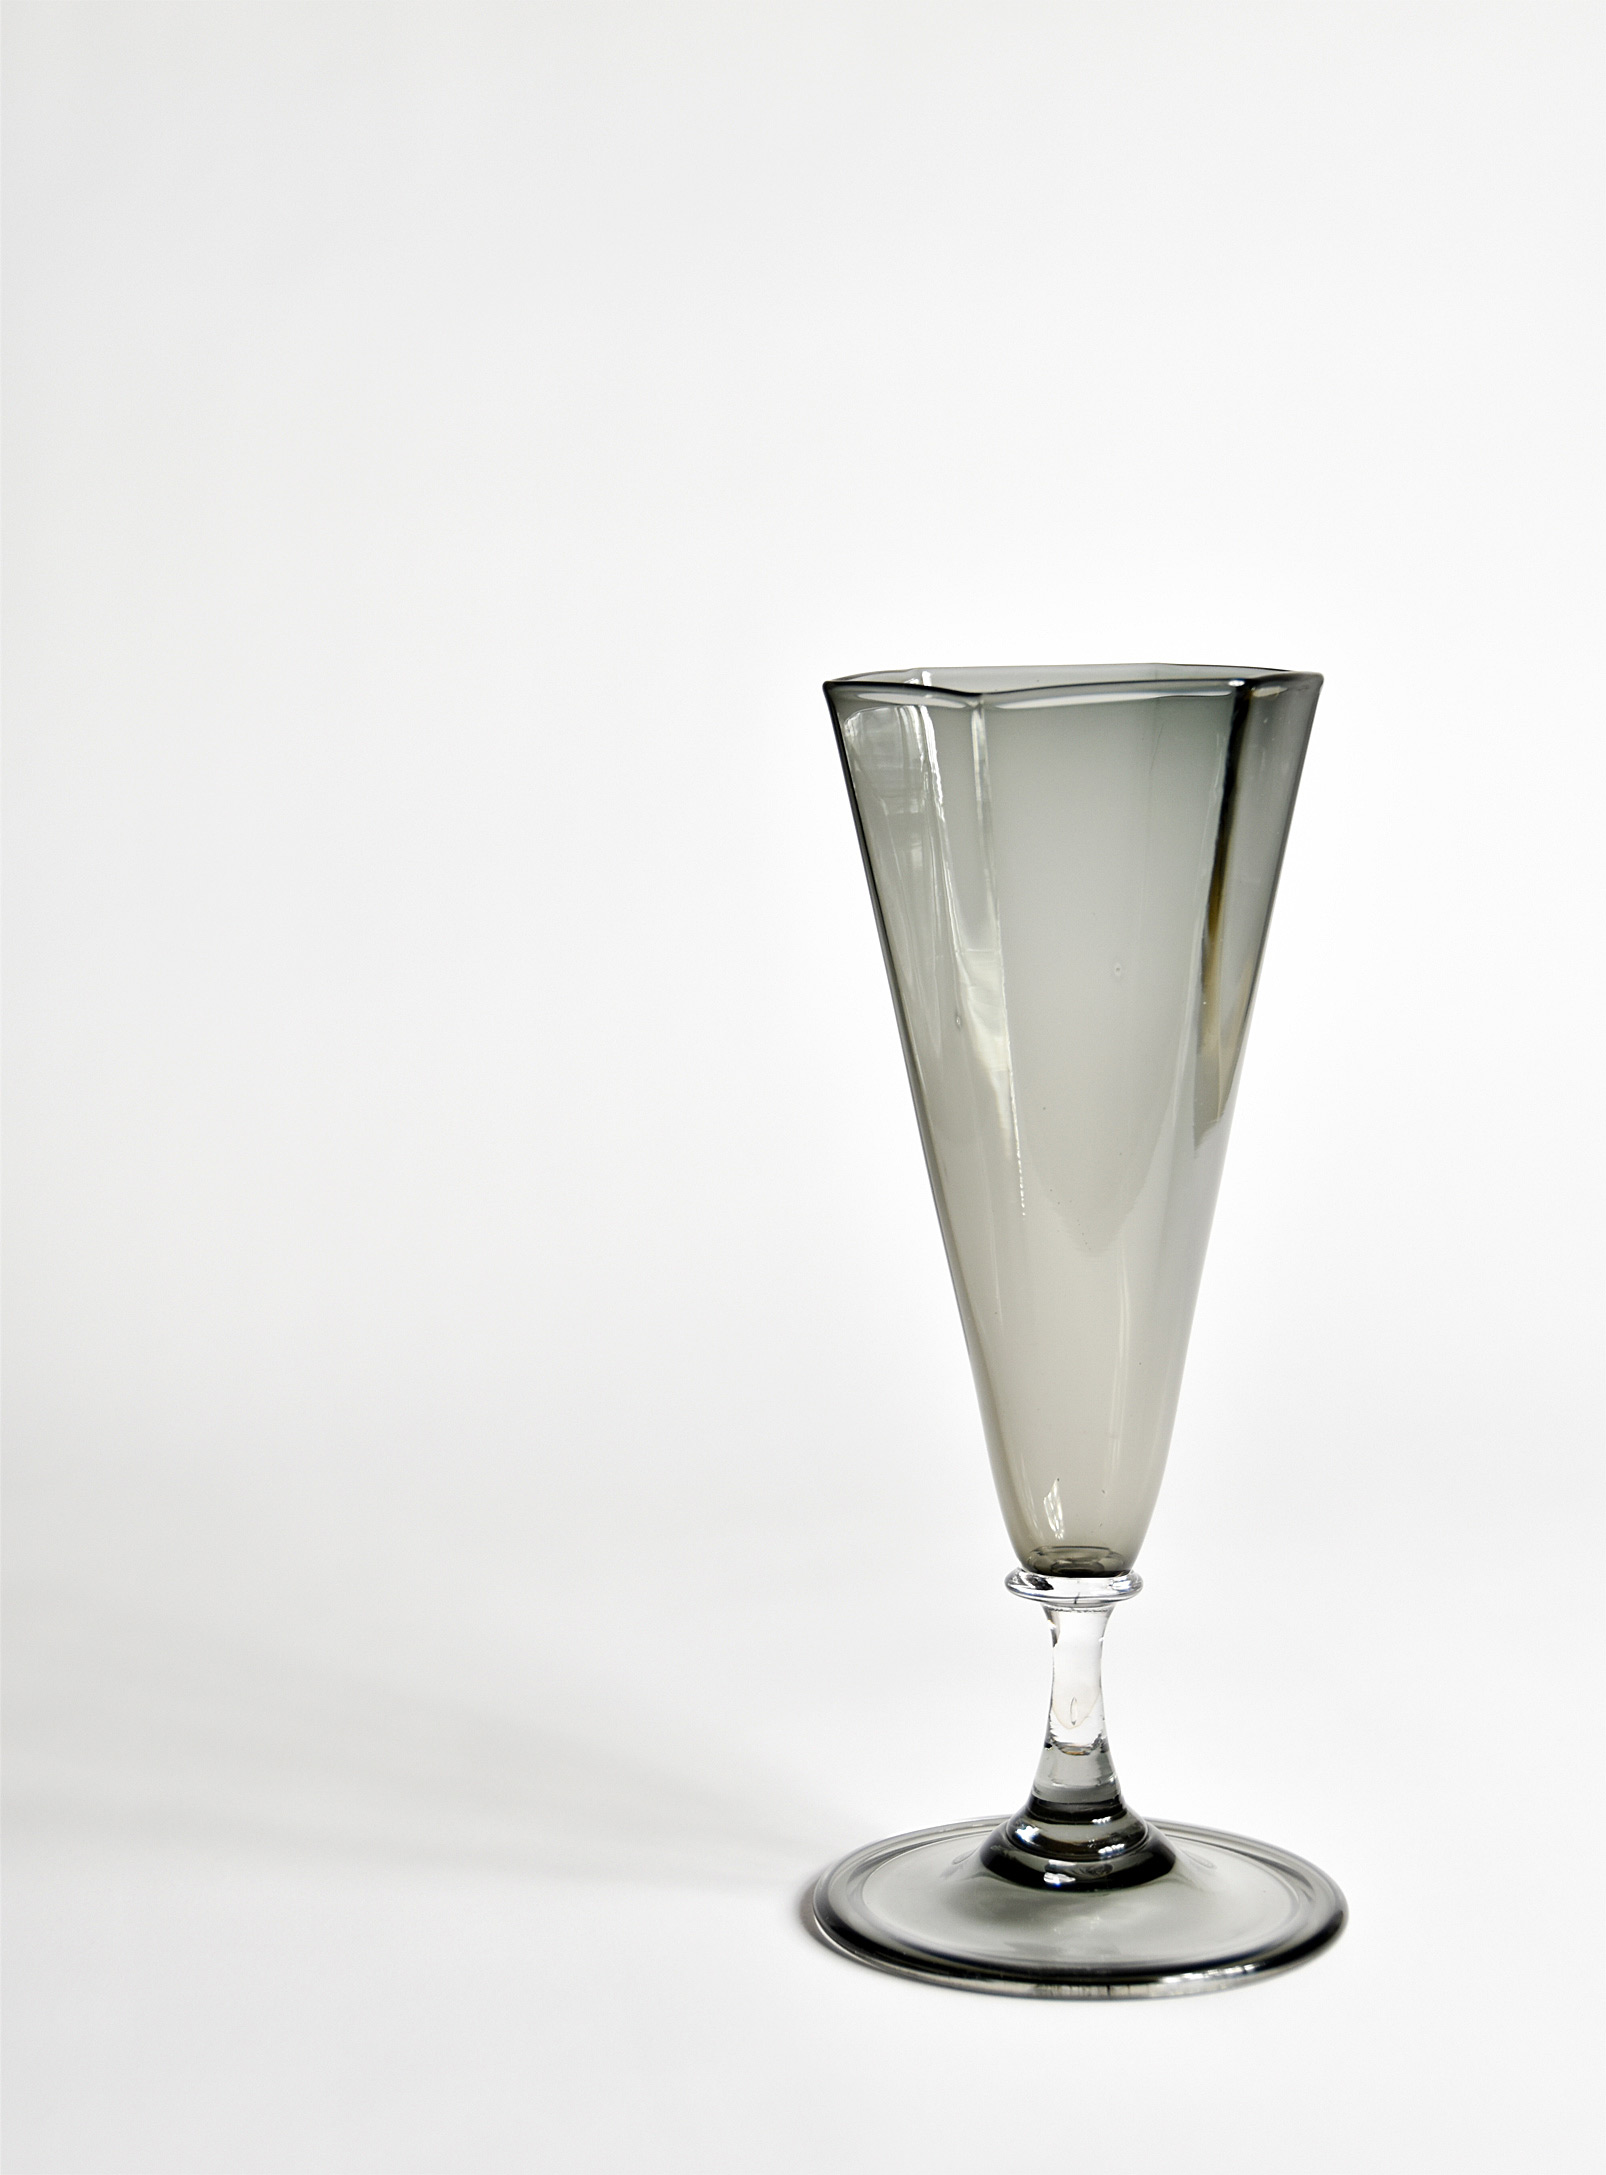 Charlie Larouche Verre Faceted Champagne Glass In Dark Grey